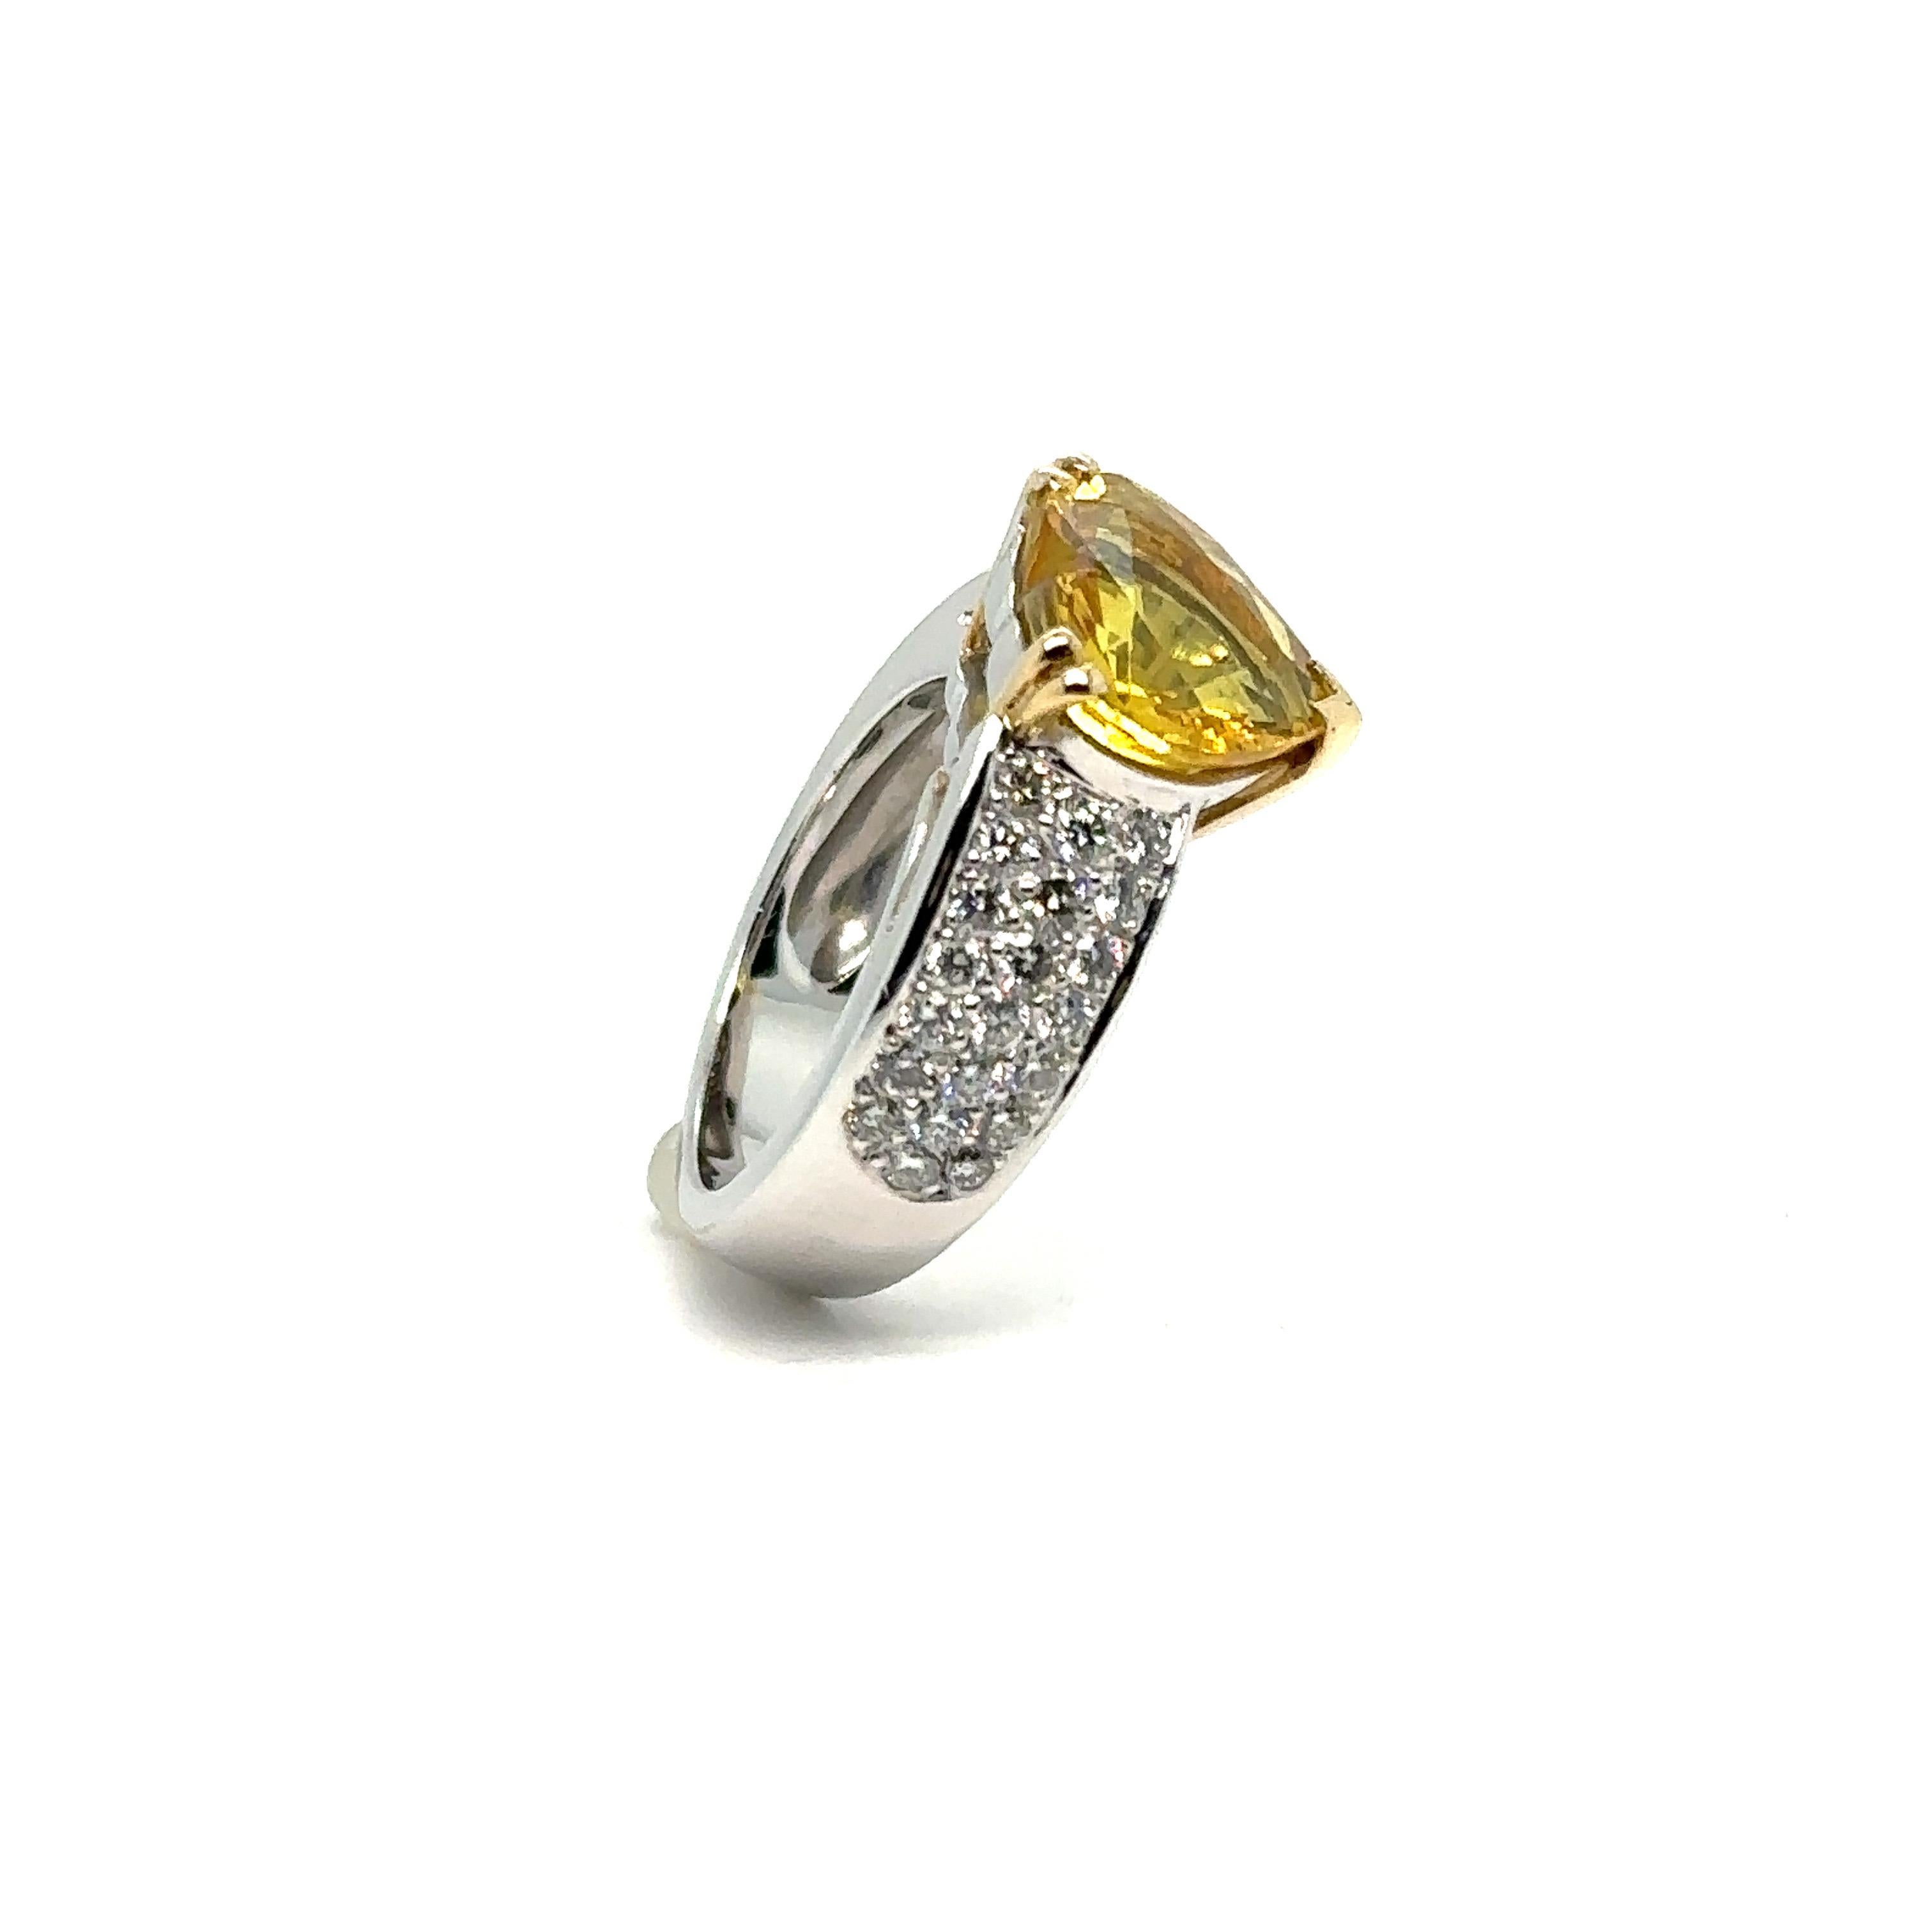 Women's French Ring, Yellow Sapphire Heart, Pavage Diamonds